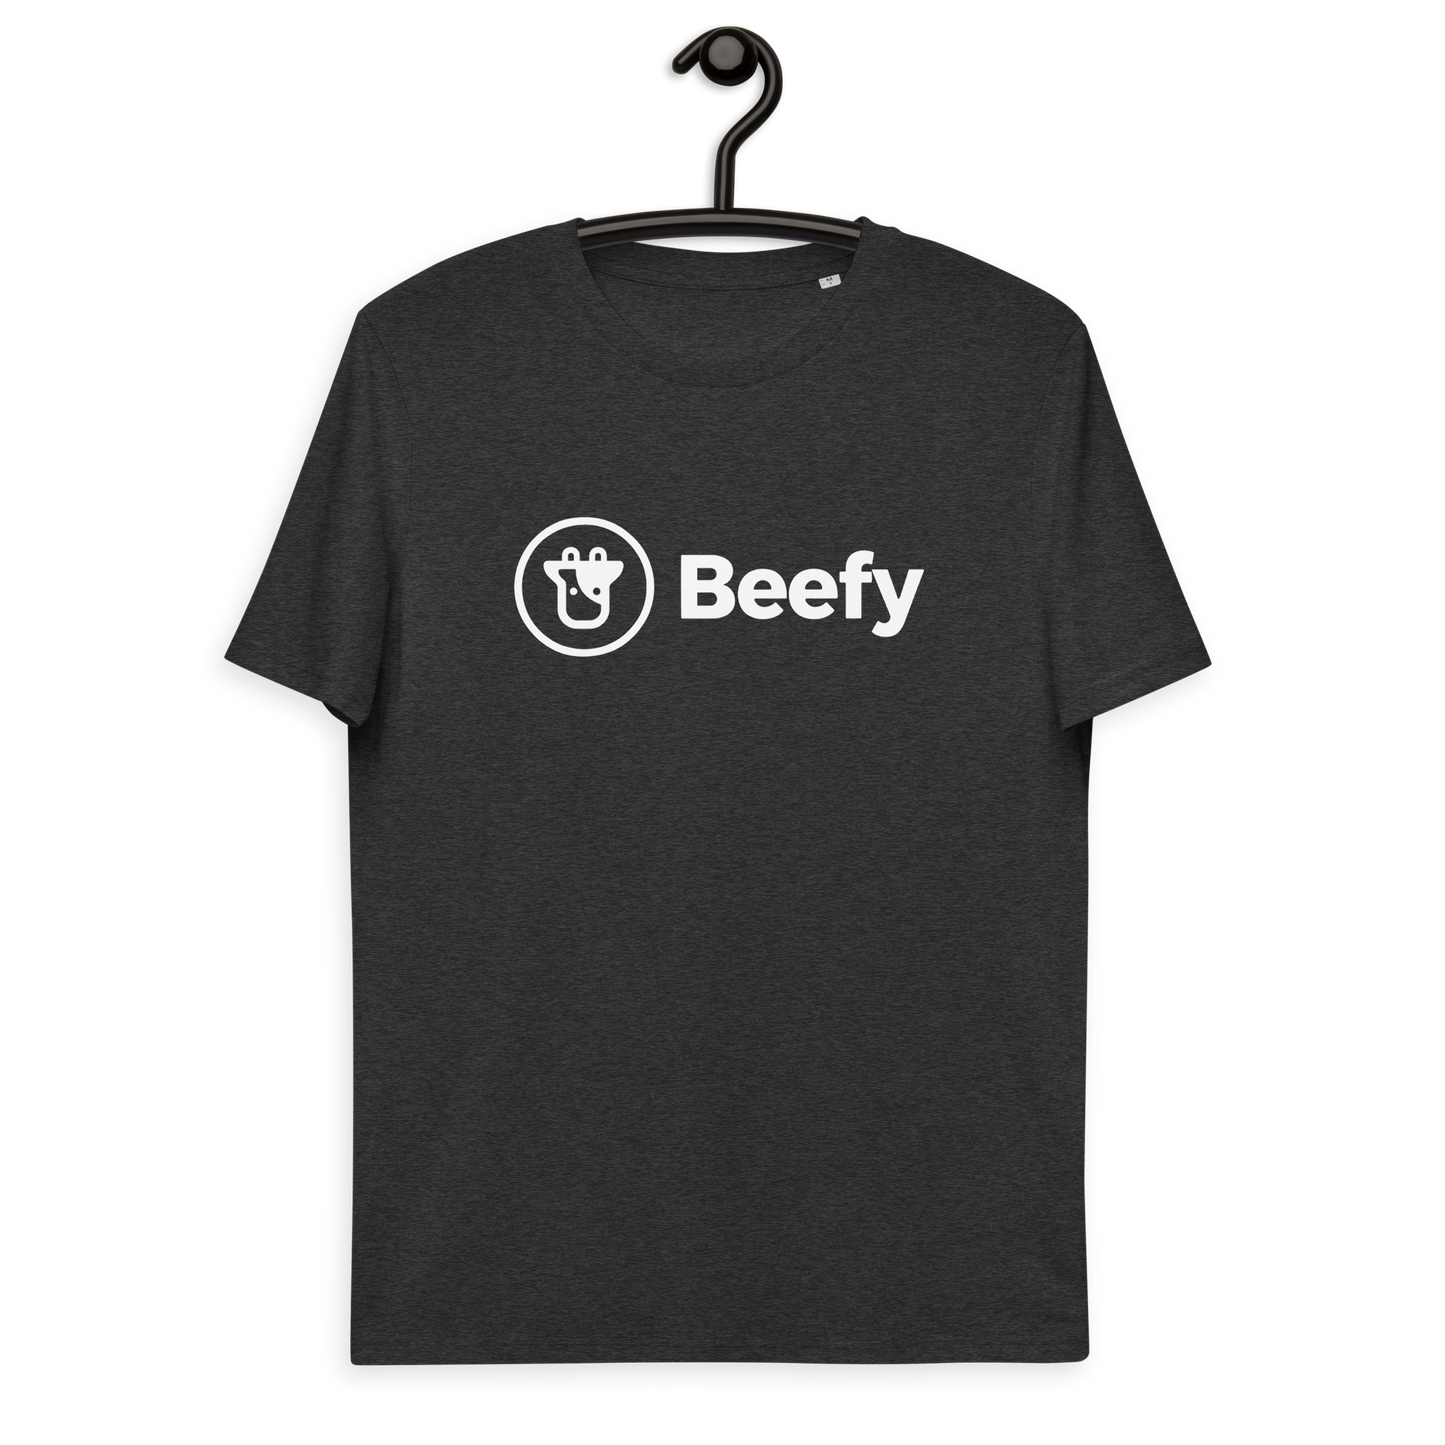 Beefy t-shirt